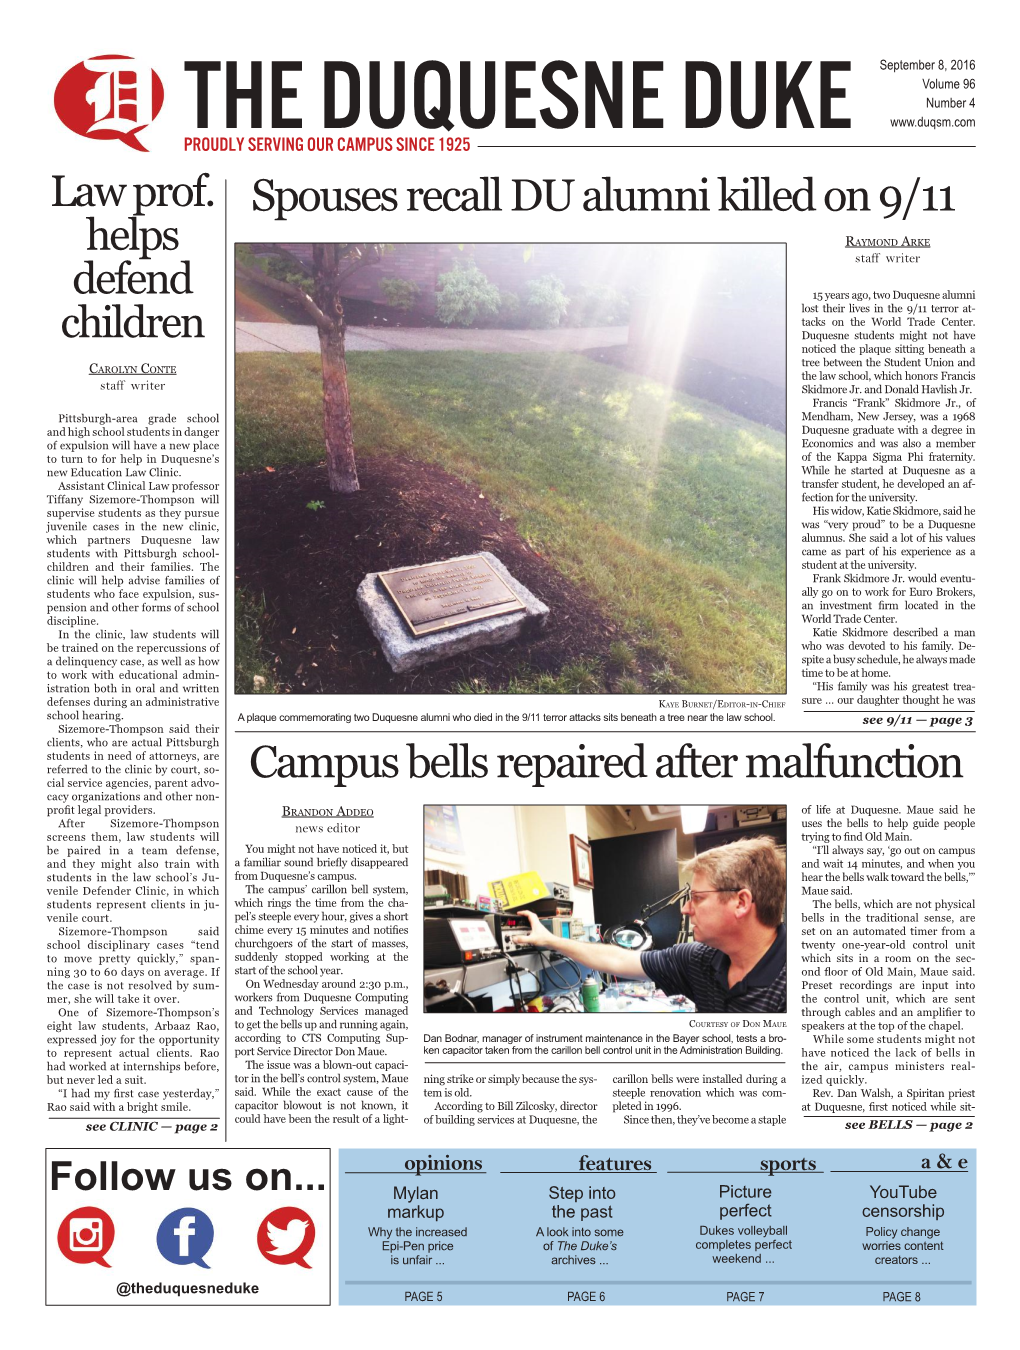 Spouses Recall DU Alumni Killed on 9/11